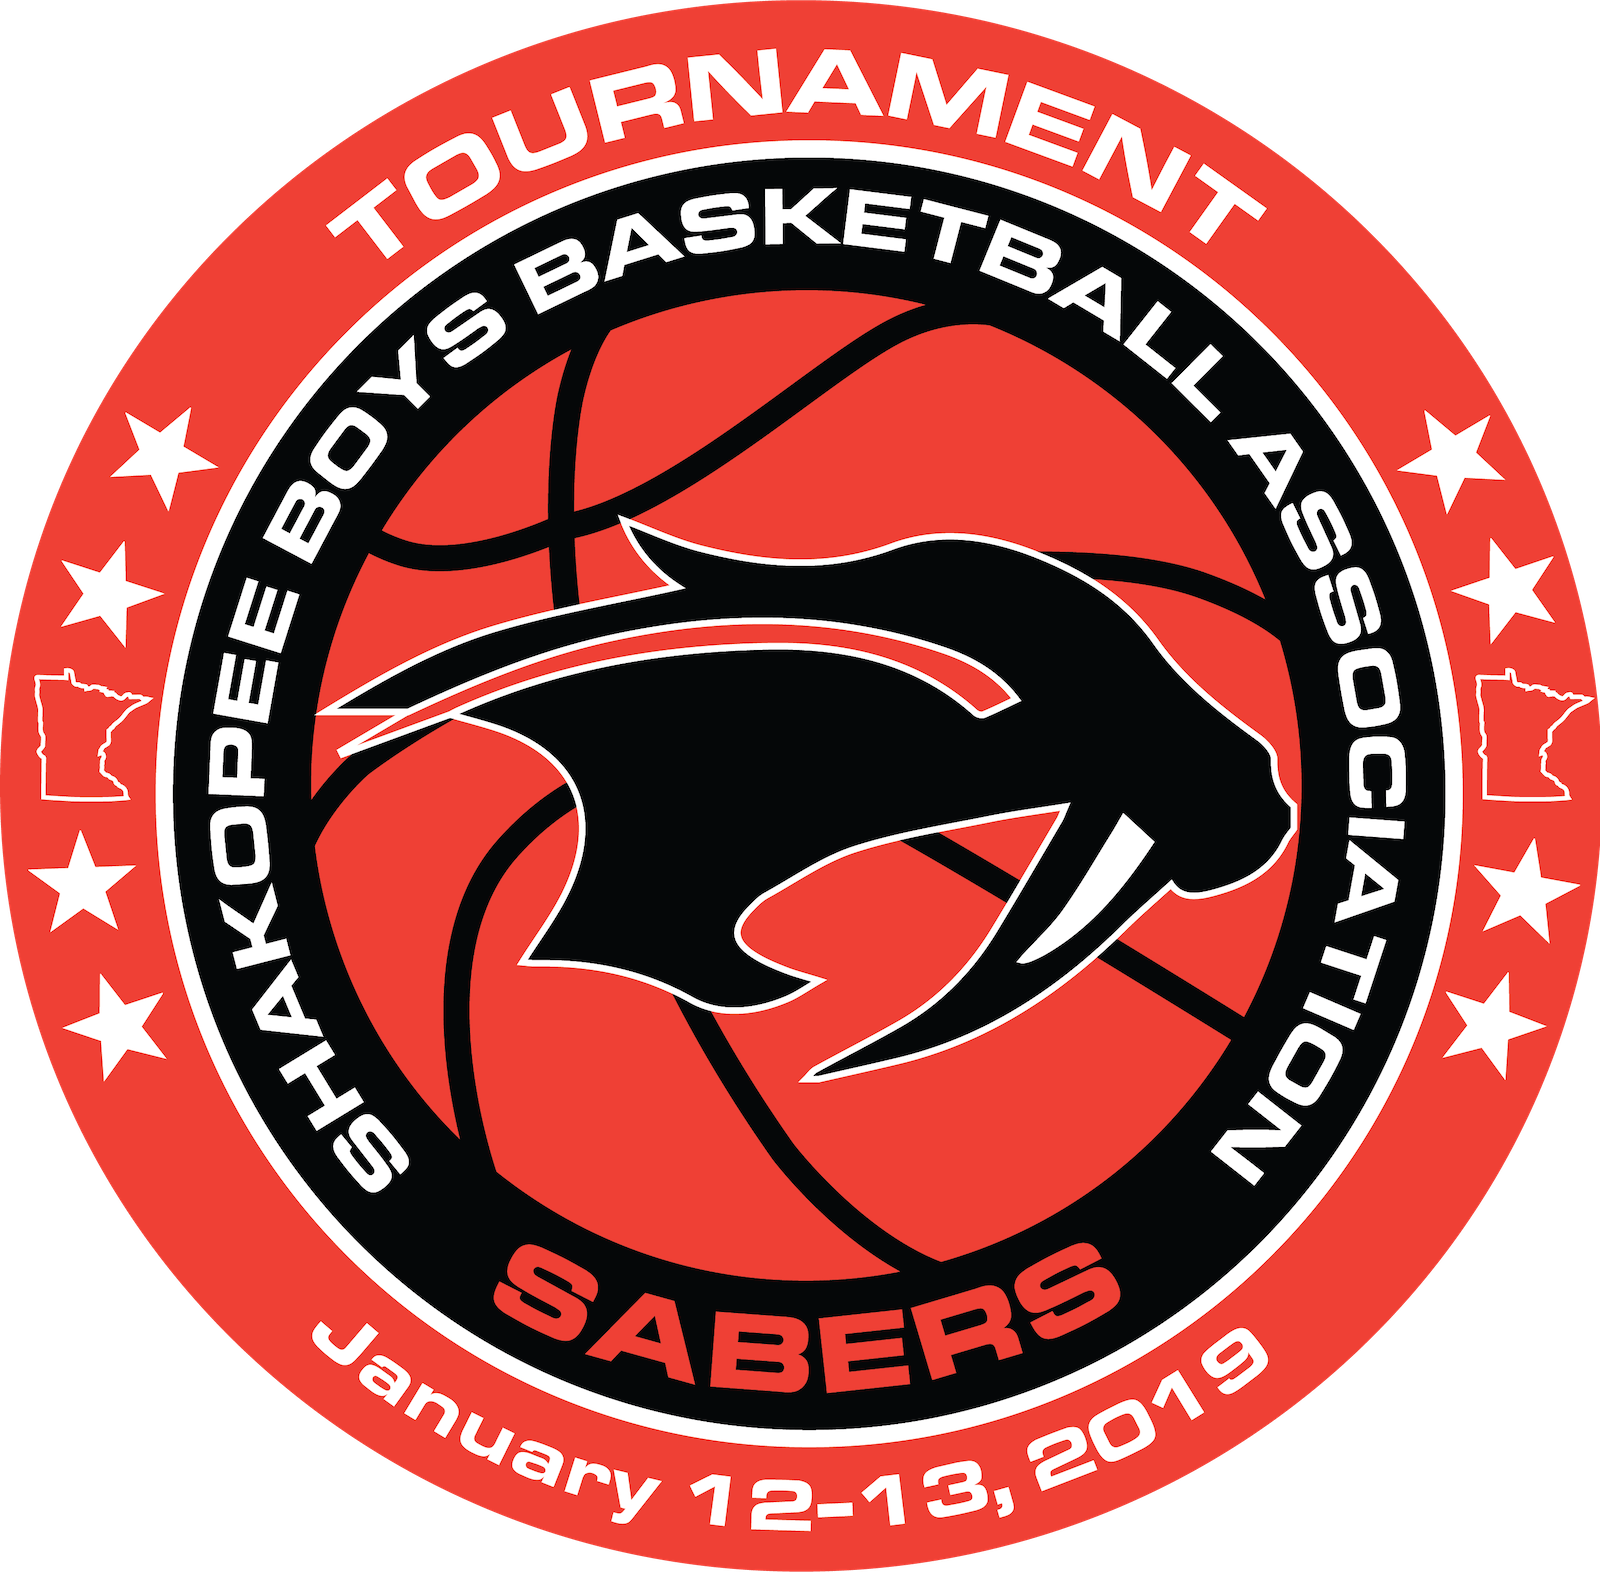 Cool Basketball Tournament Logo - Shakopee Tournament